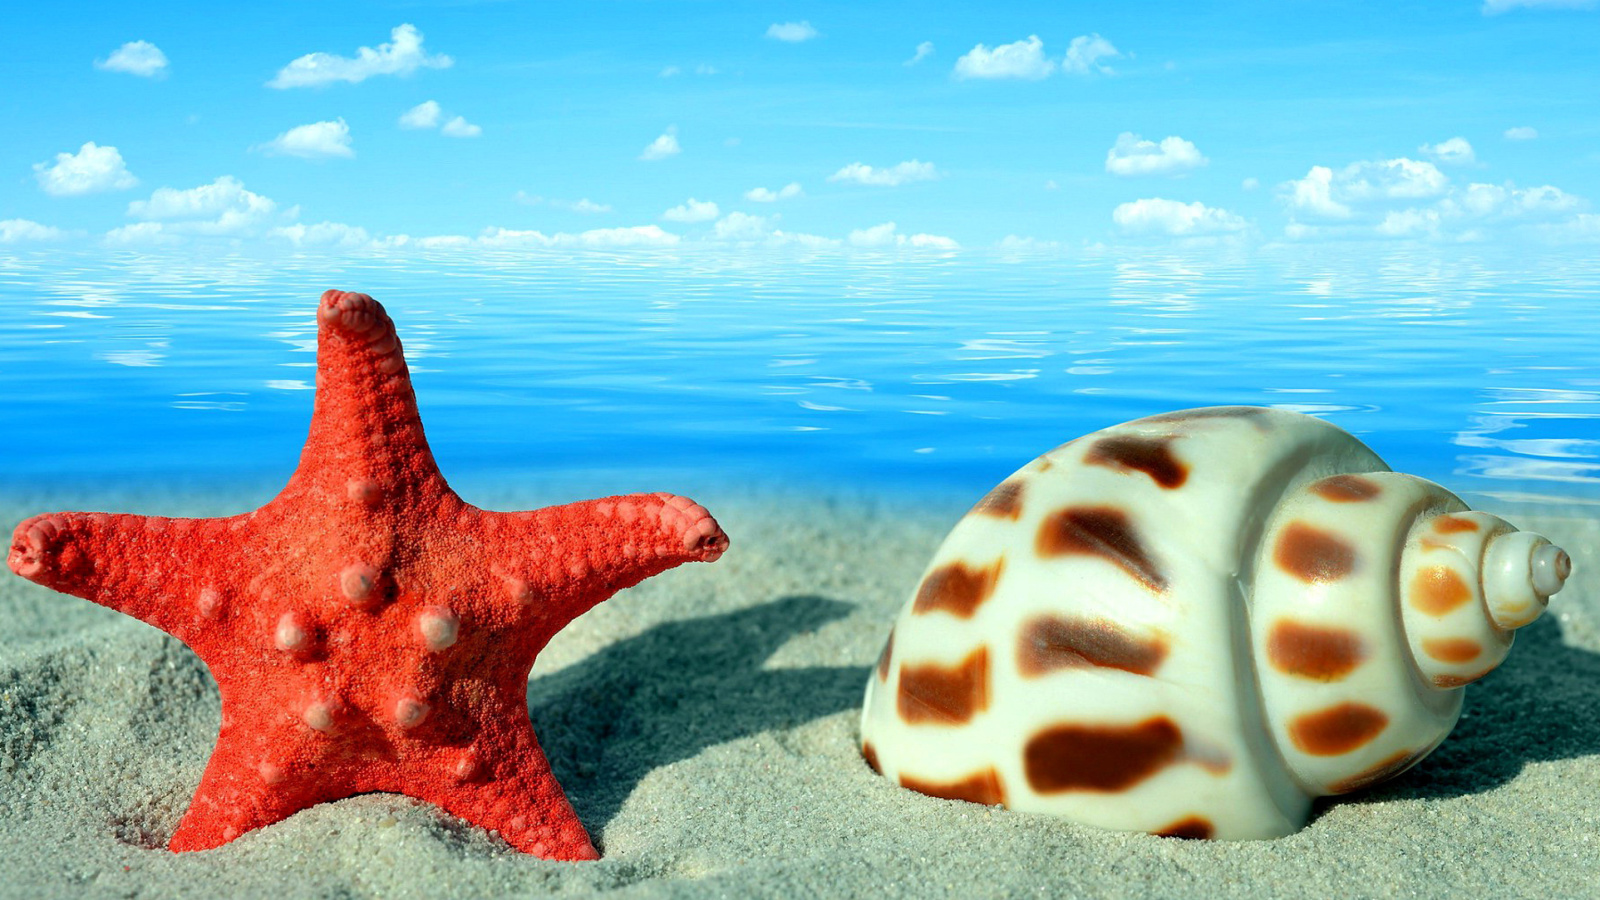 Seashell and Starfish wallpaper 1600x900